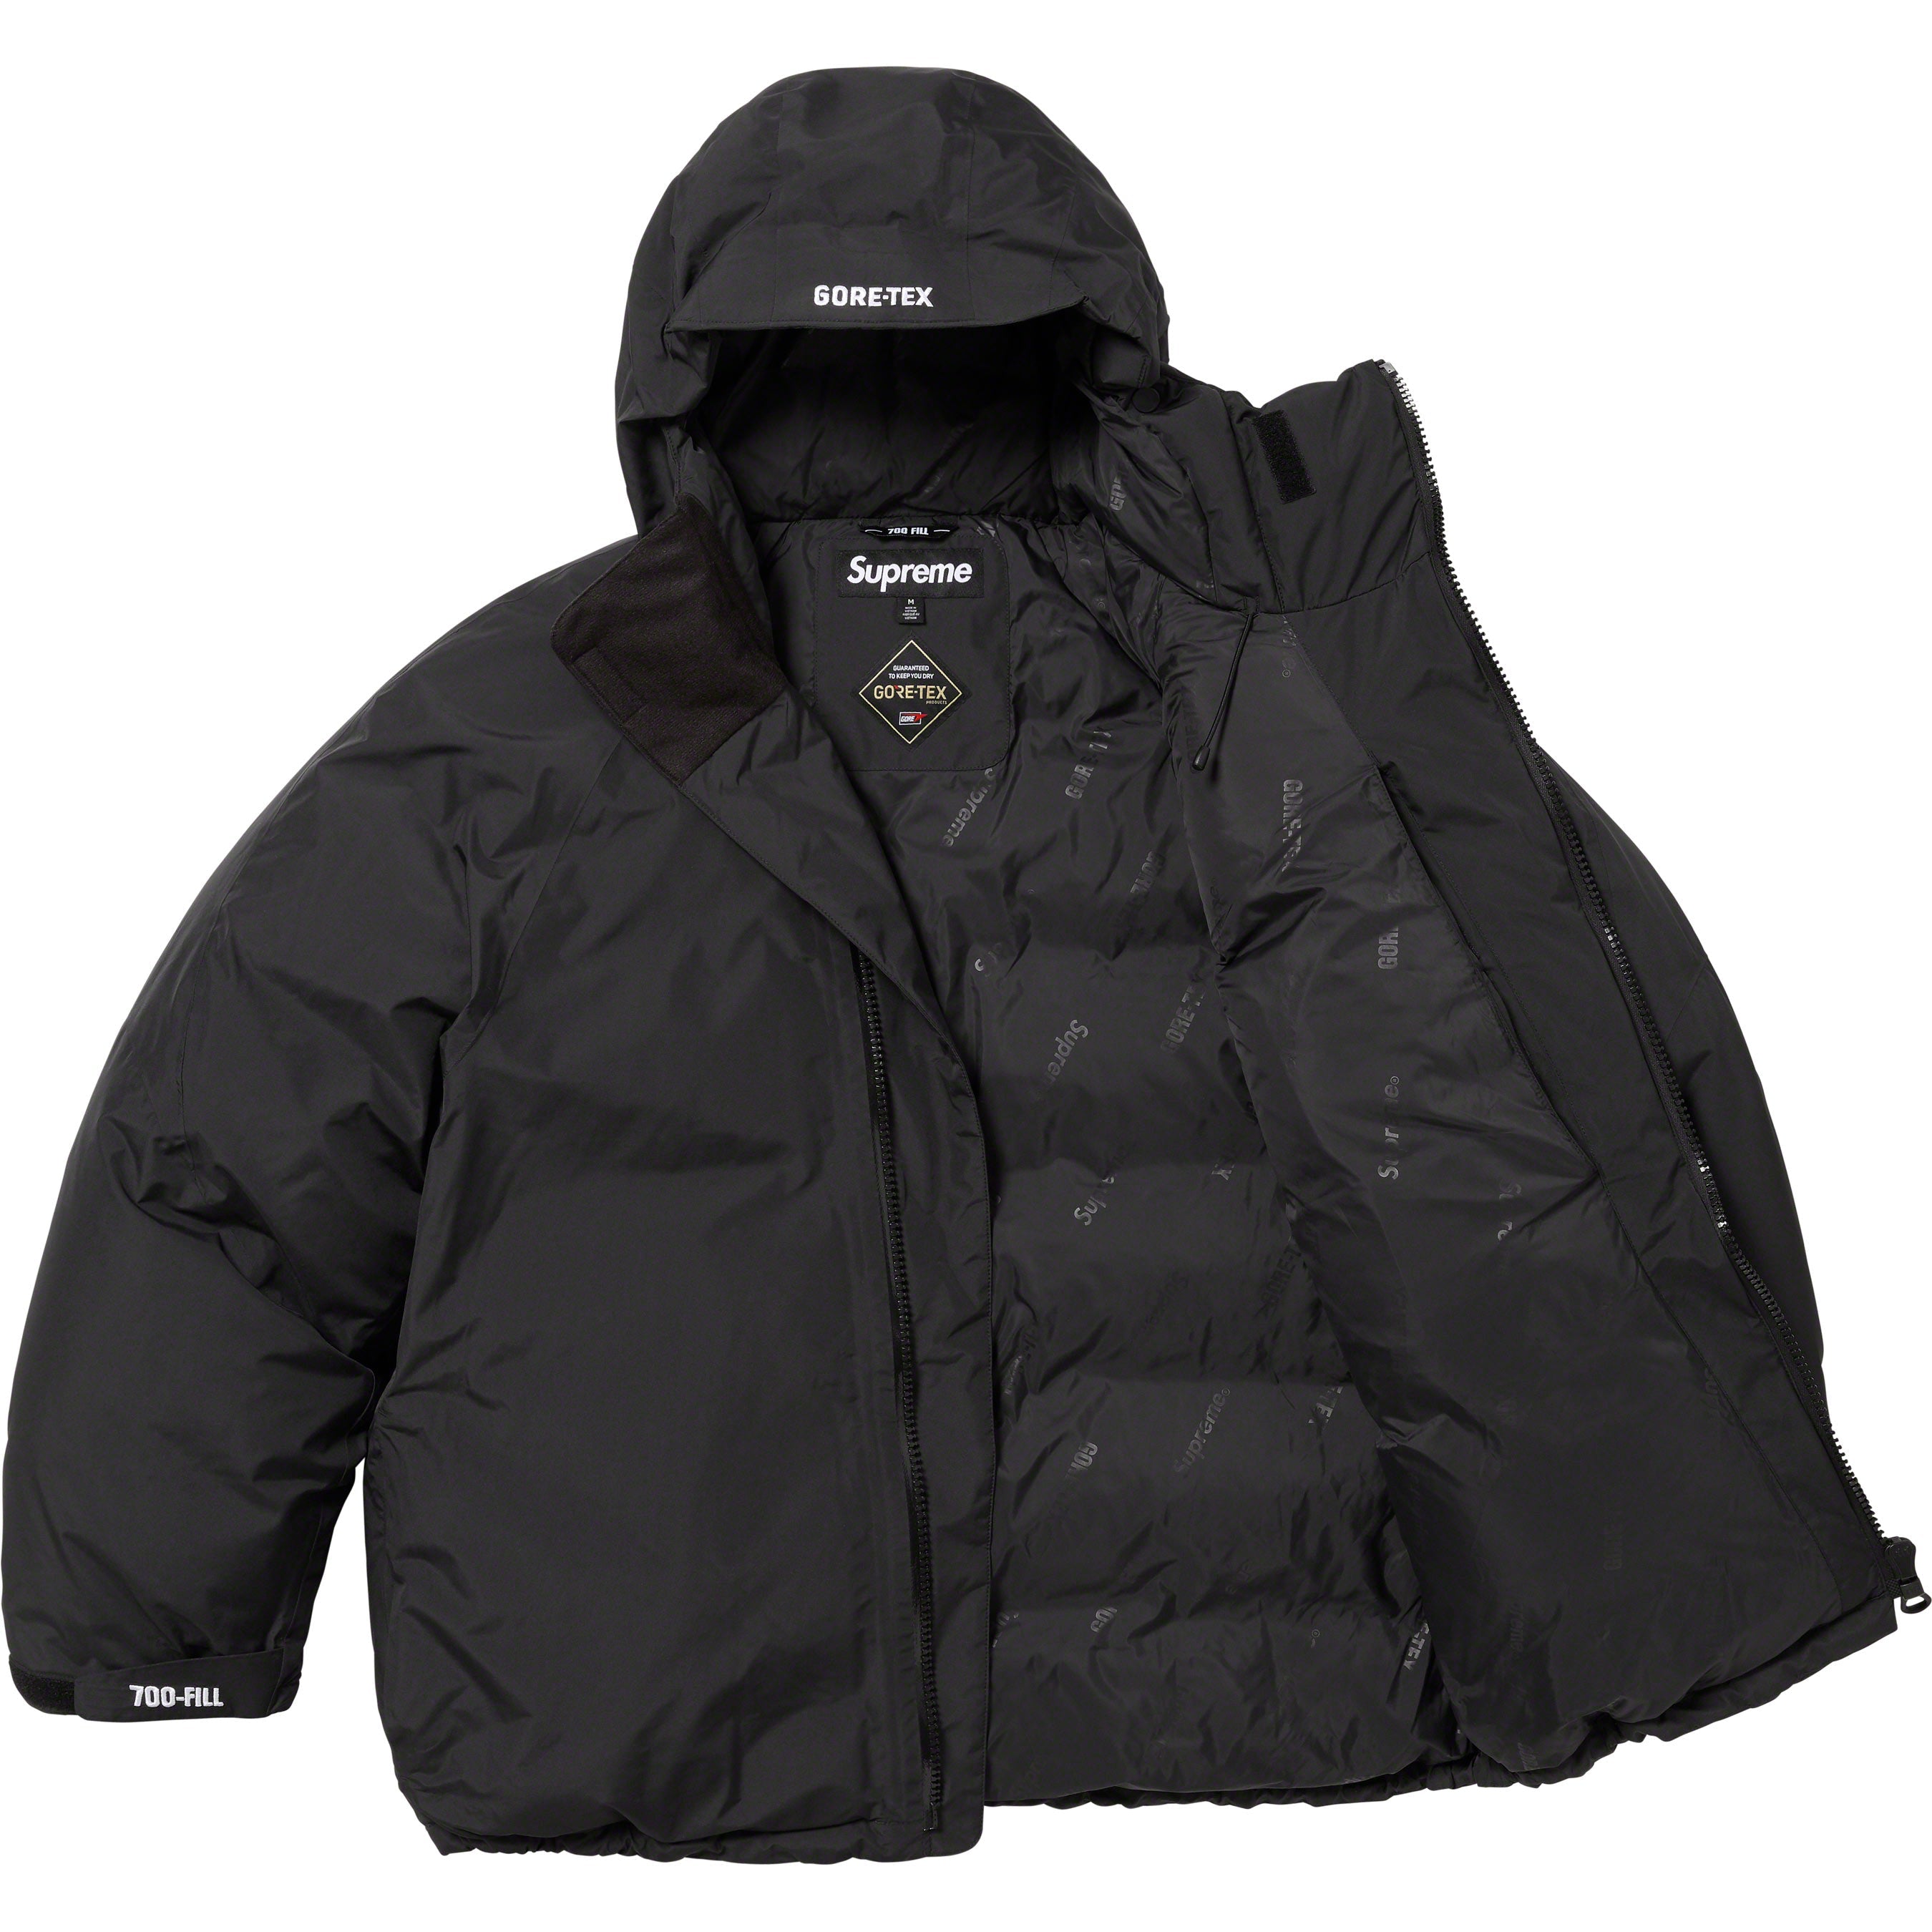 GORE-TEX INFINIUM Expedition Down Jacket | Hype Streetwear - RADPRESENT S / Beige / Nylon